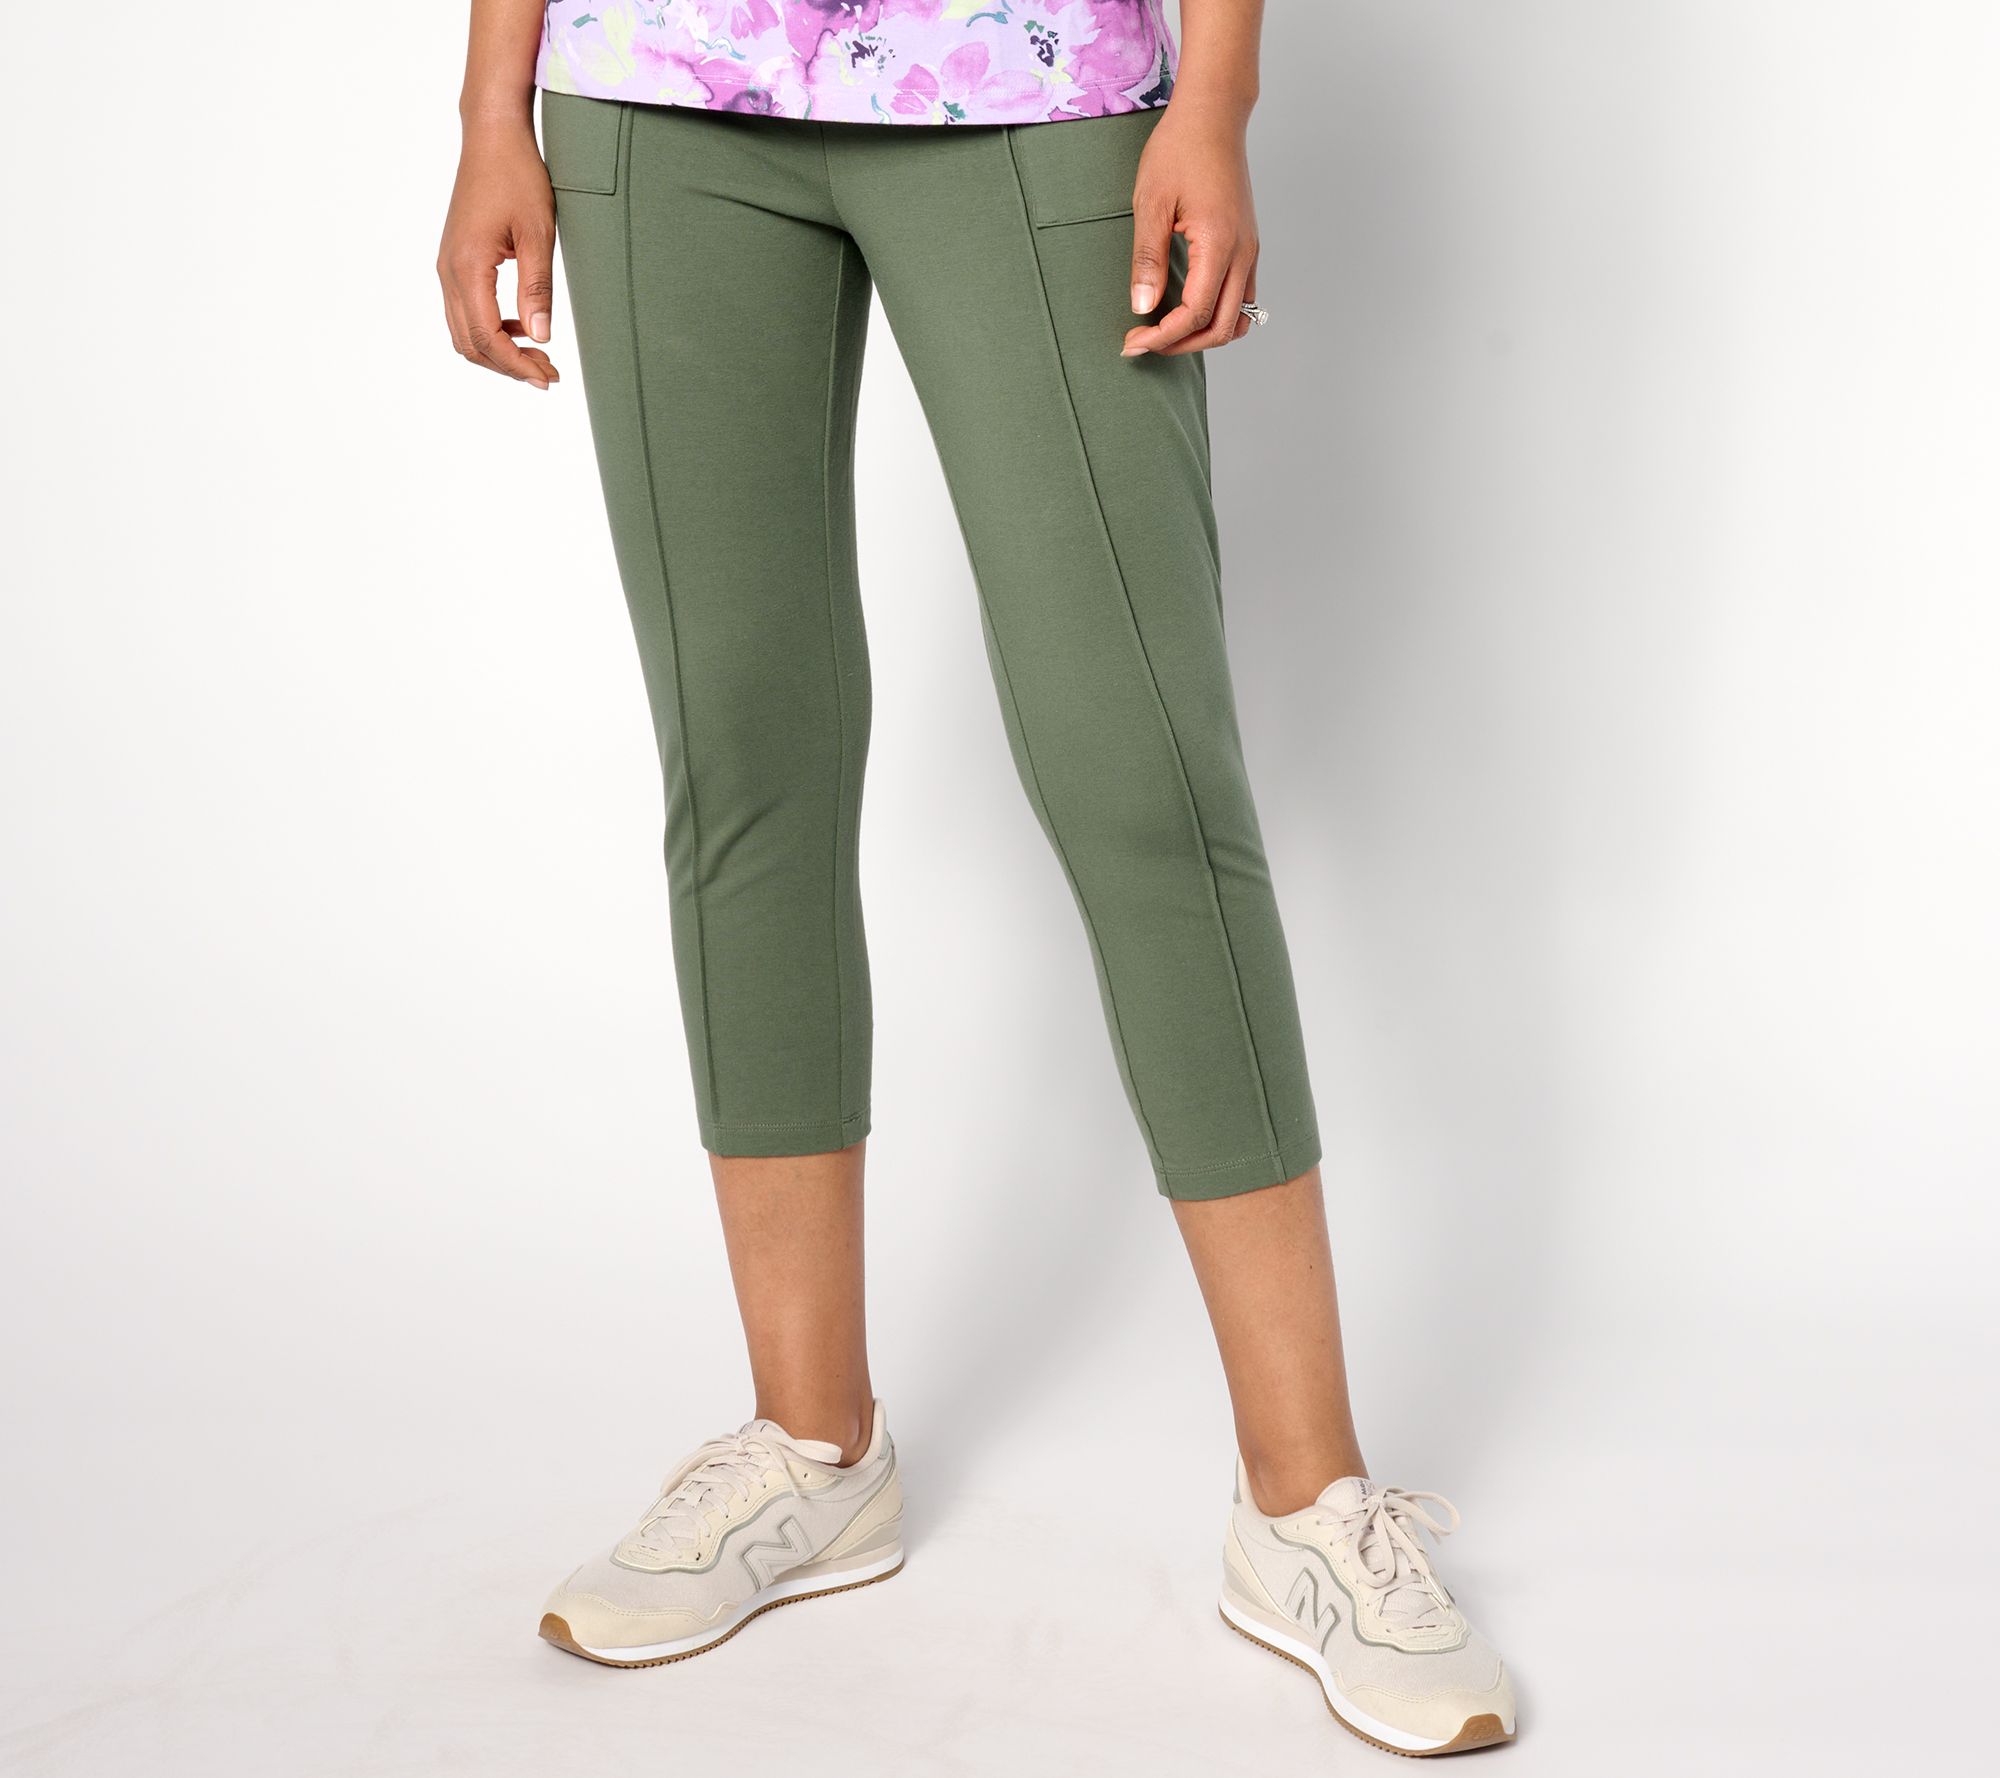 Buy online Gracit Women's Capri Leggings Combo from Capris